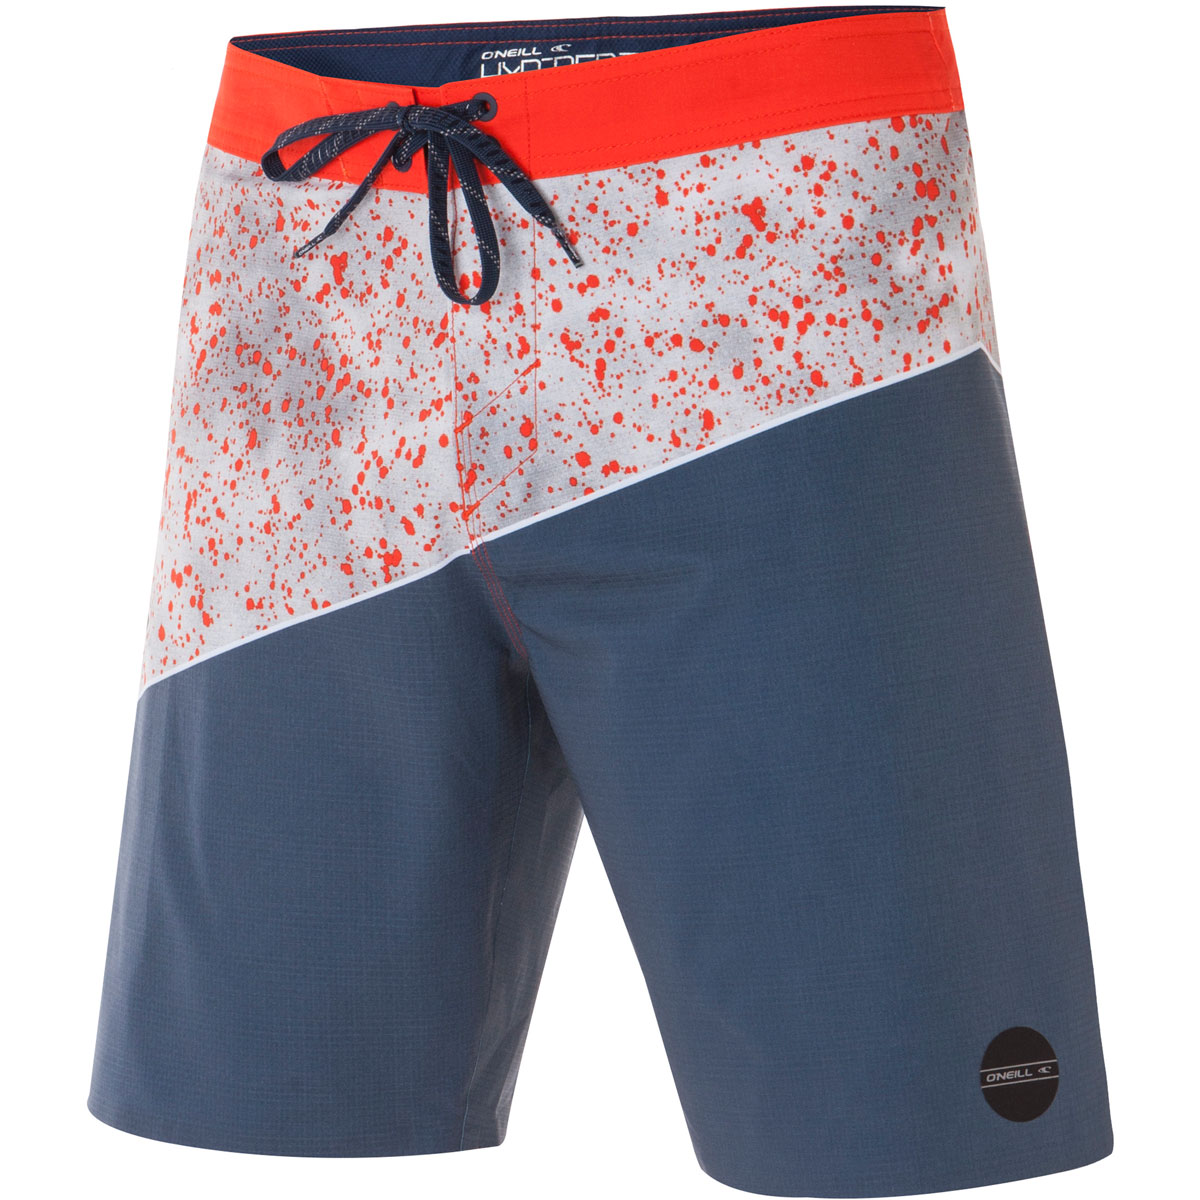 O'Neill Side Wave Men's Boardshort Shorts - Neon Red